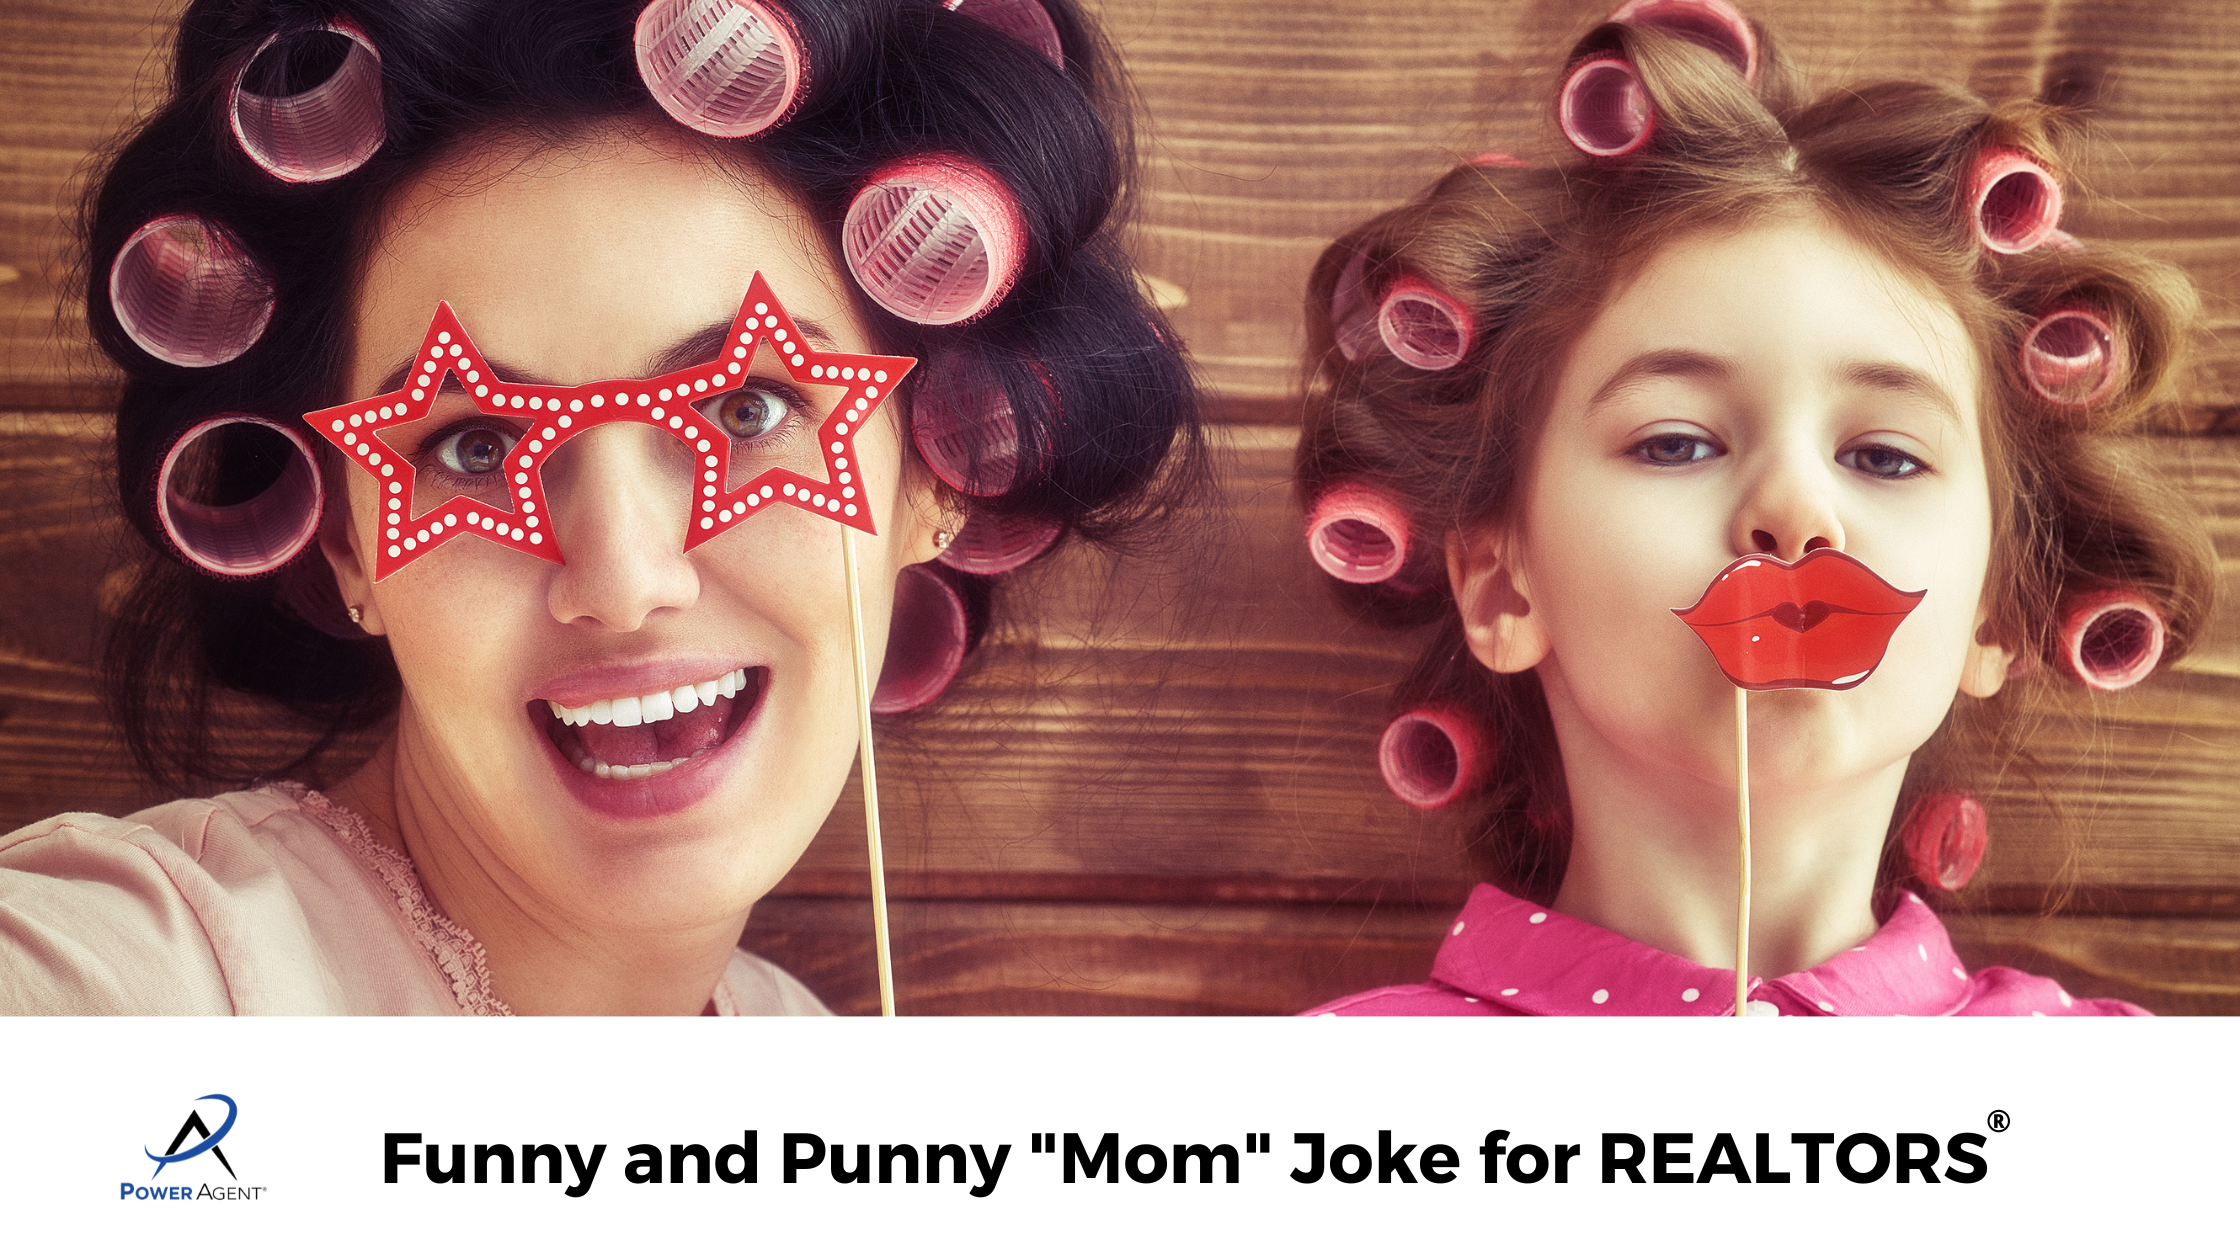 Funny and Punny "Mom" Joke for REALTORS